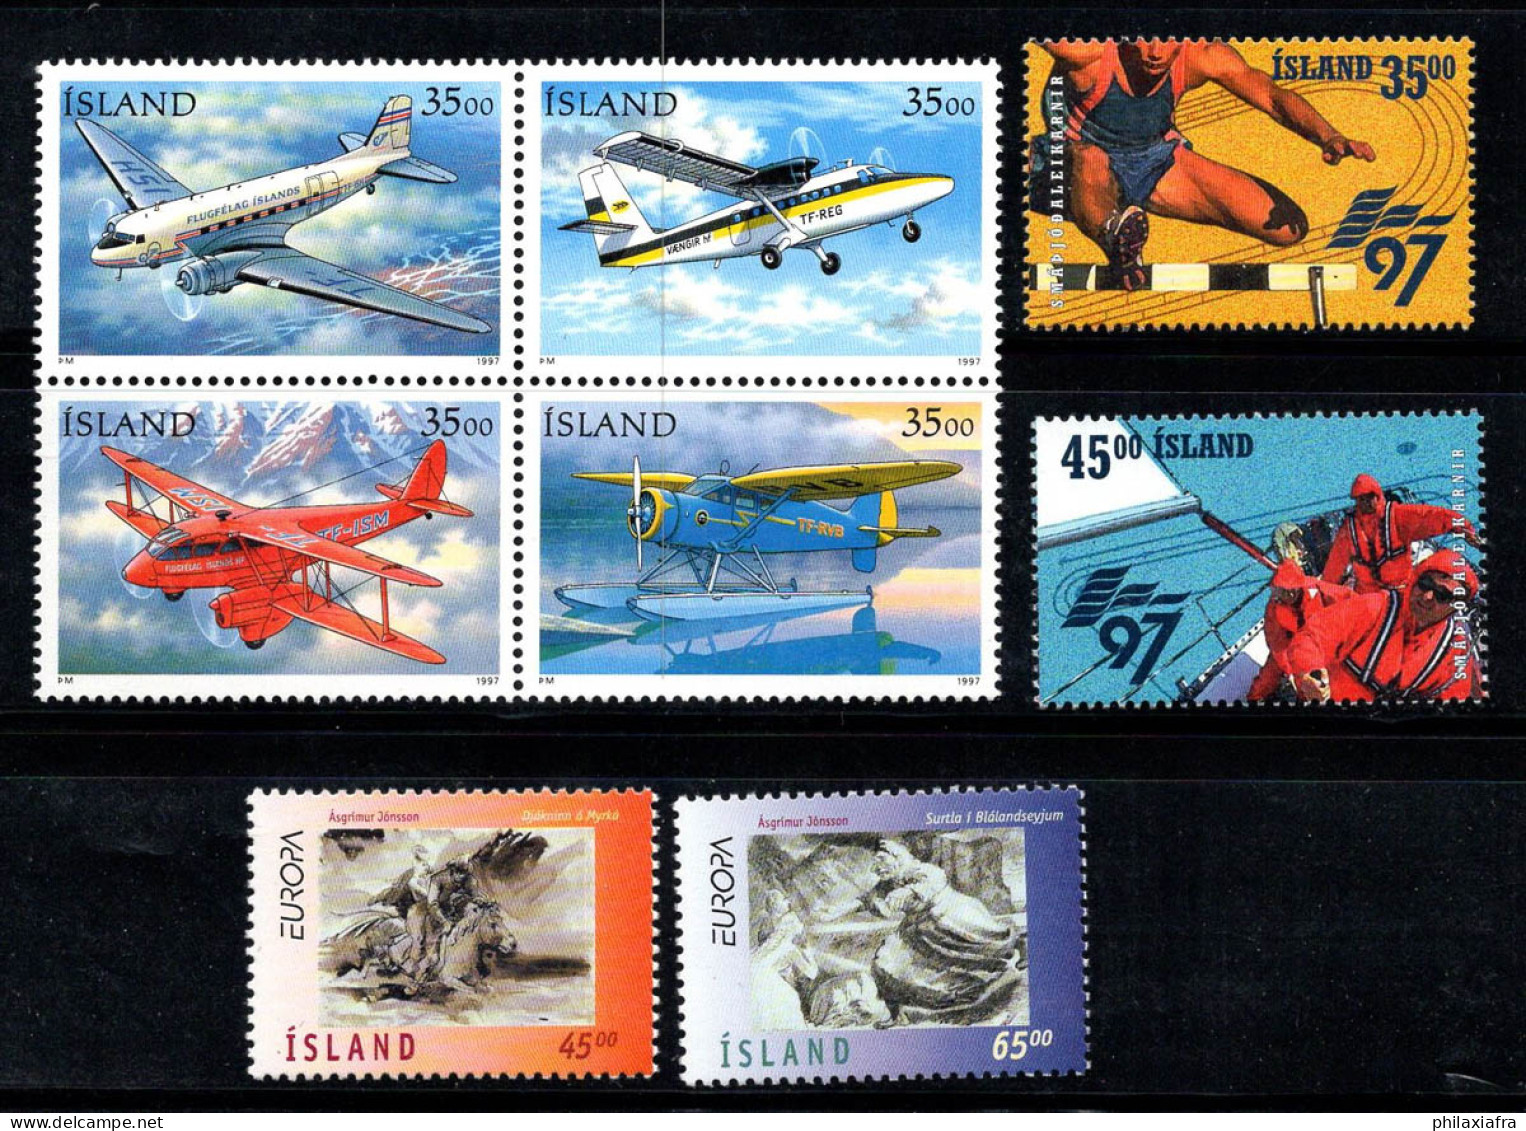 Islande 1997 Mi. 866-873 Neuf ** 100% Avions, Sports, Europe Cept - Neufs